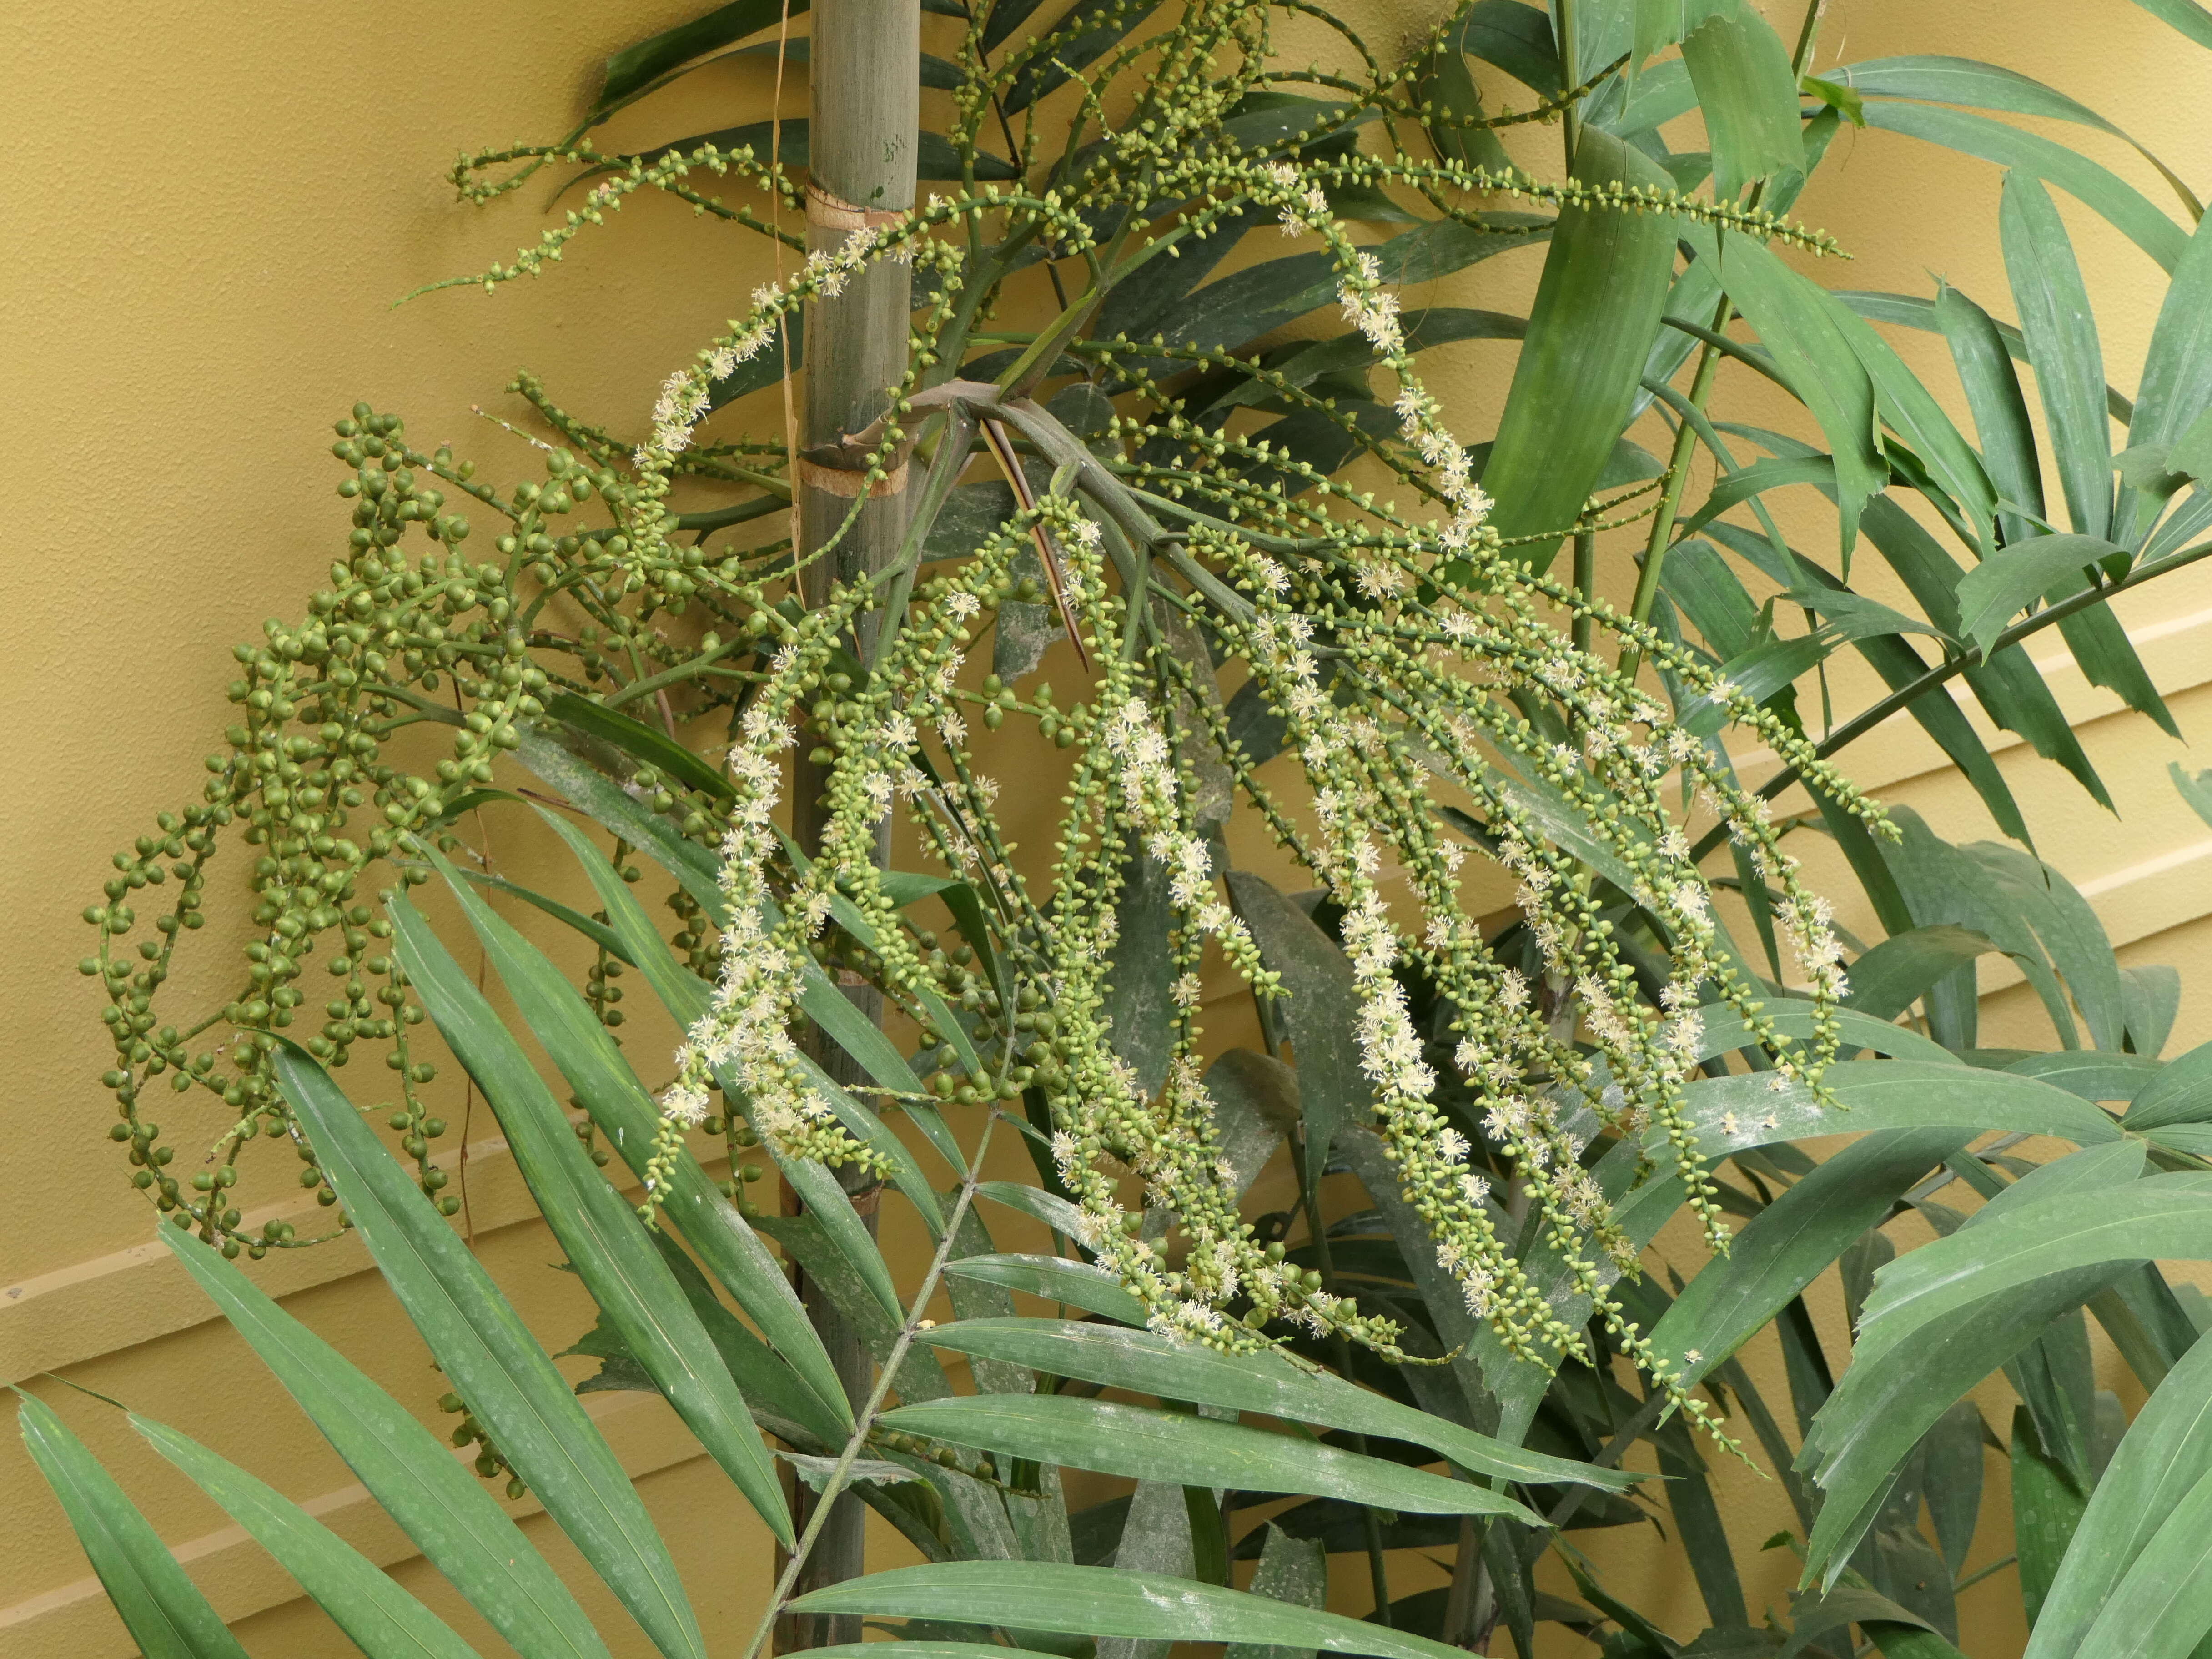 Image of Macarthur Palm